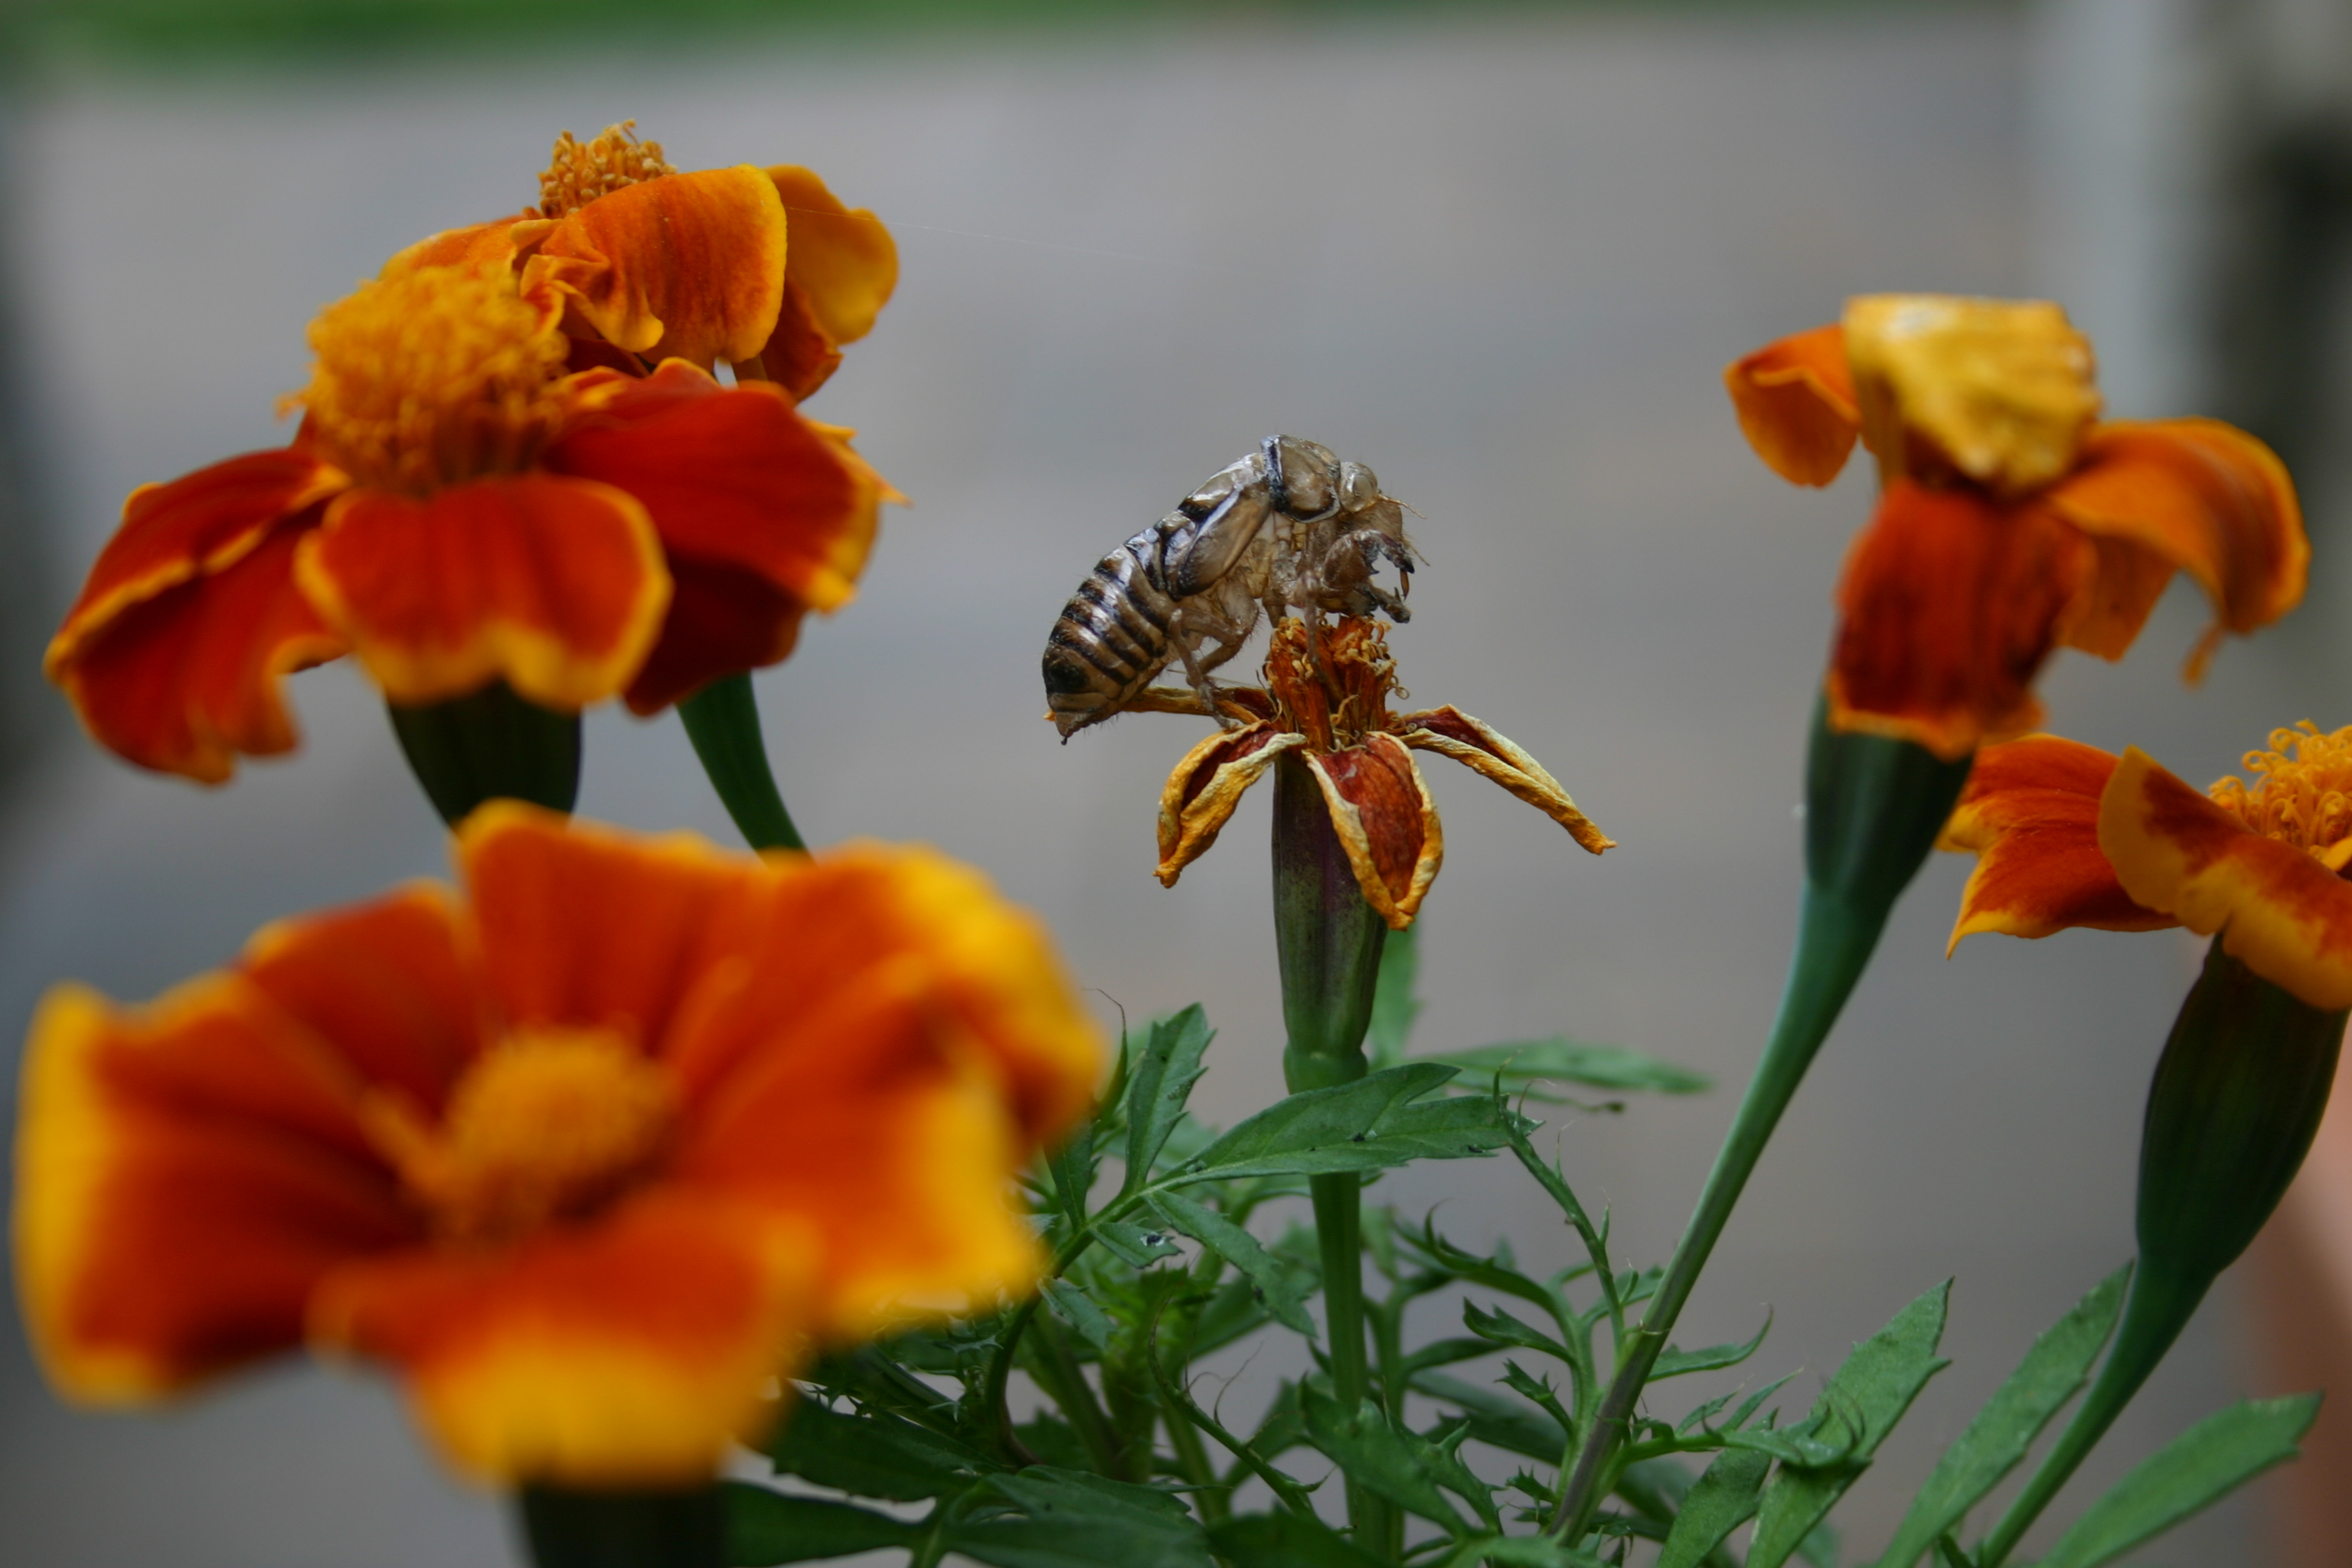 A shed cicada skin among orange Marigold flowers.